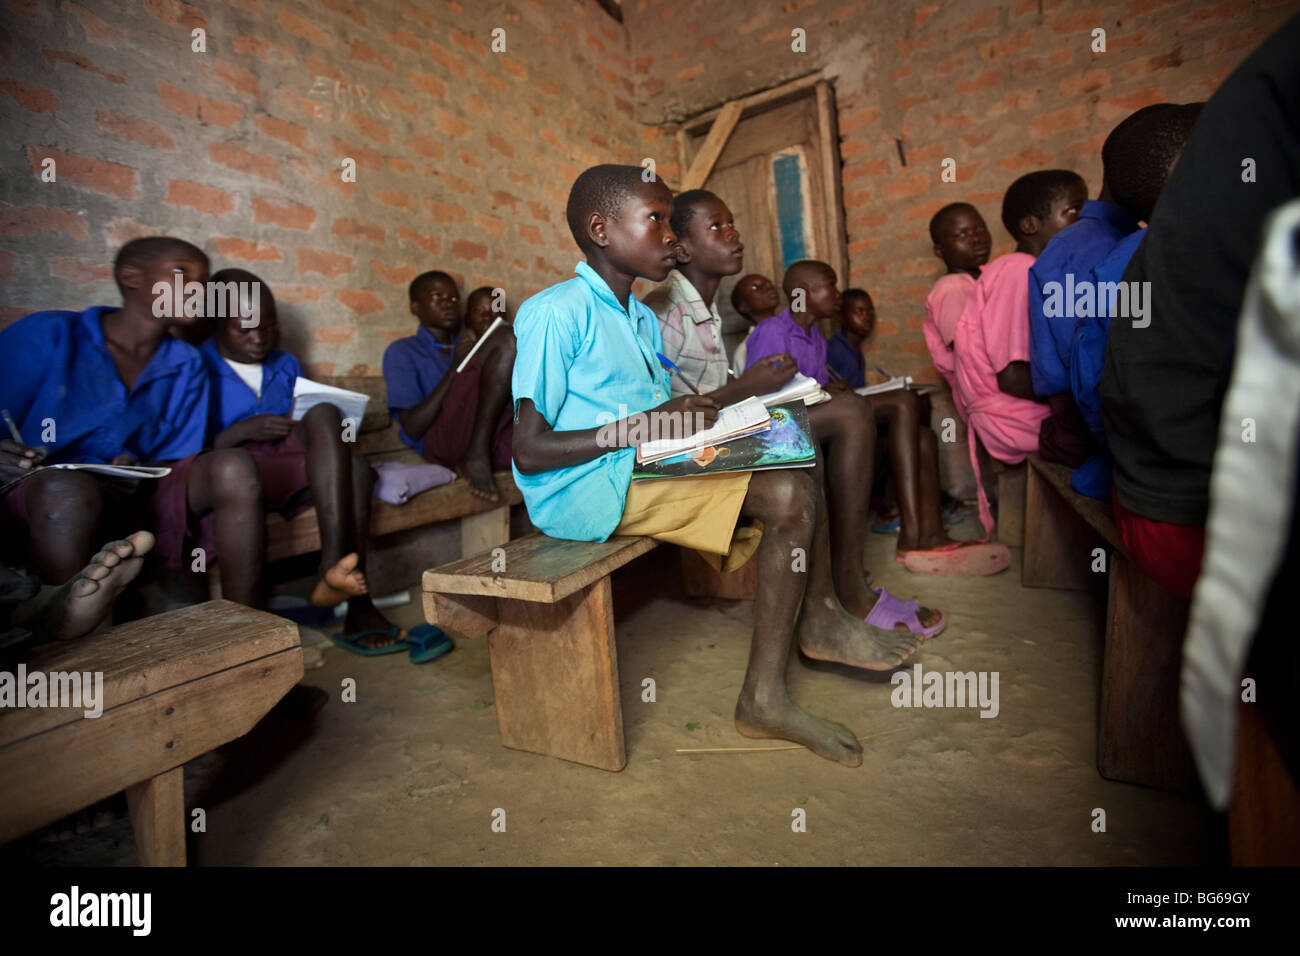 Primary school children learn in a dark classroom without desks in Amuria, Eastern Uganda. Stock Photo